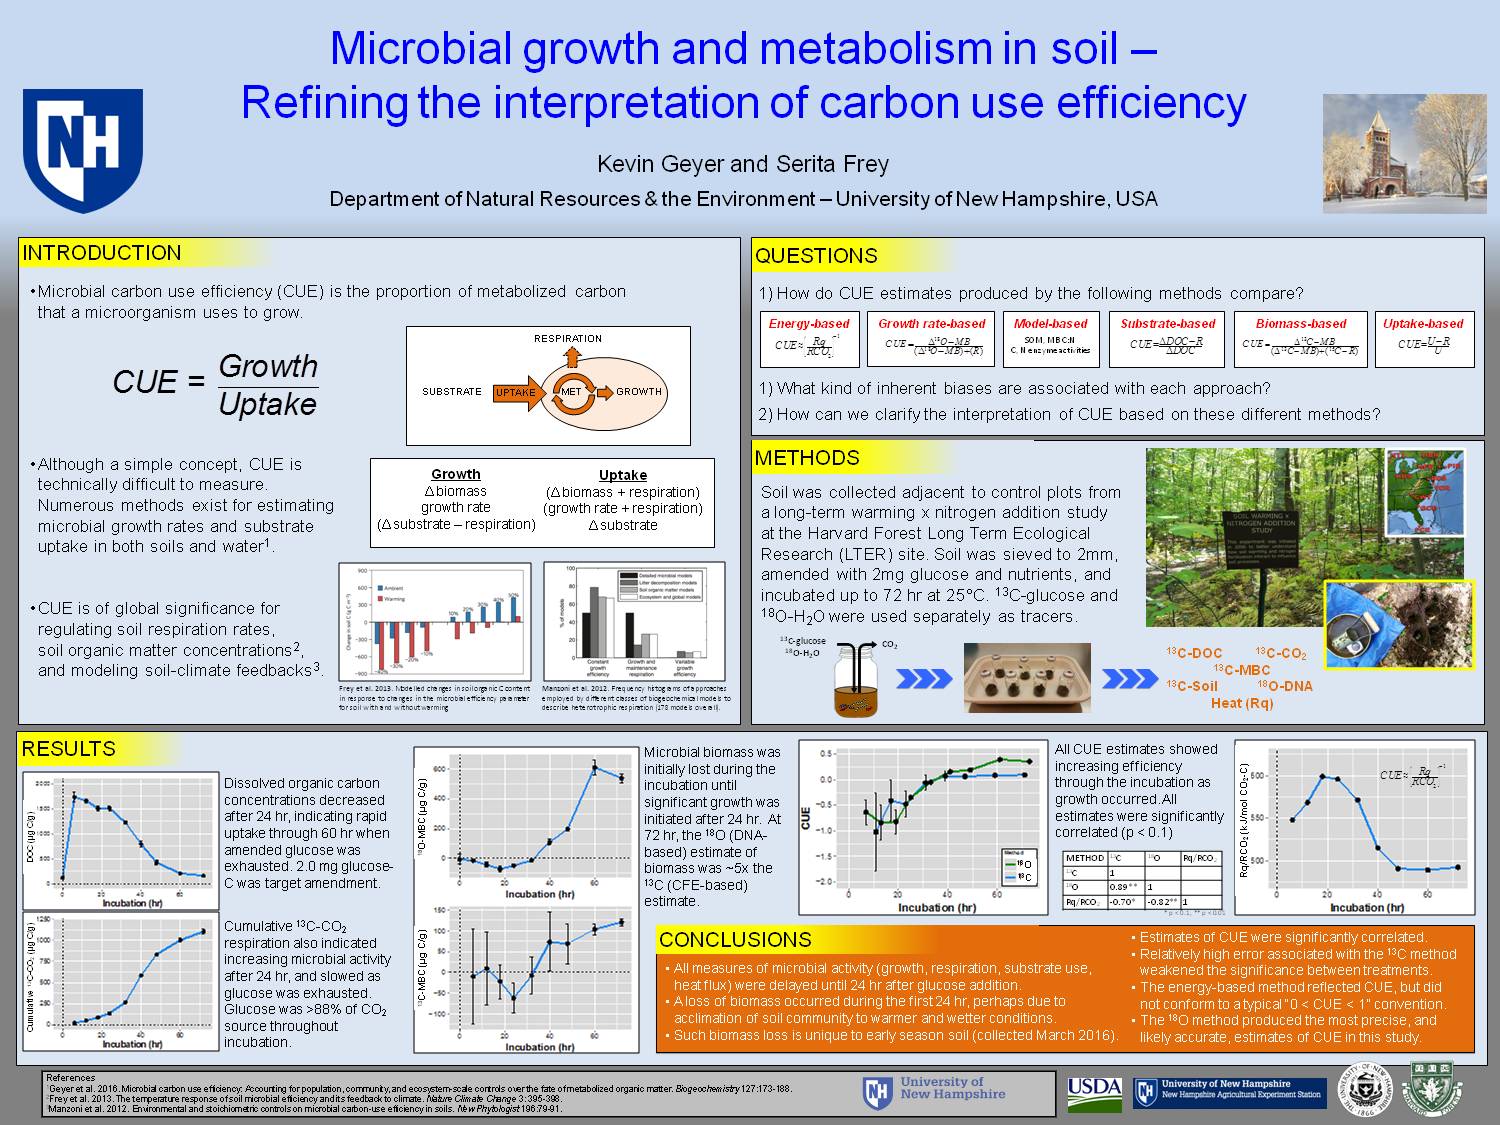 Microbial Growth And Metabolism In Soil by geyerkev